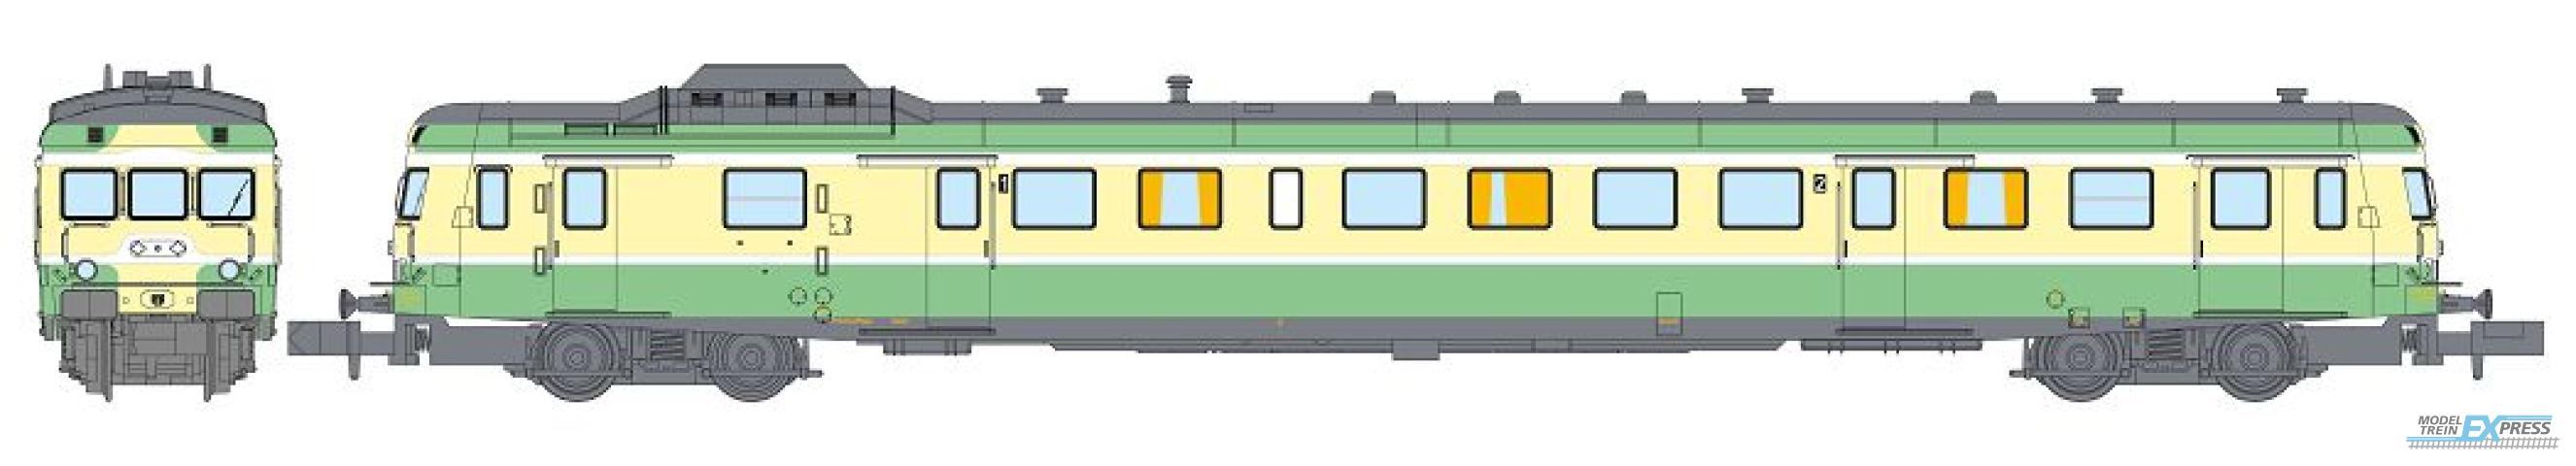 REE models NW-250 X-2899 Green without skirt 1st / 2nd class - LYON-VAISE Era IV ANALOG